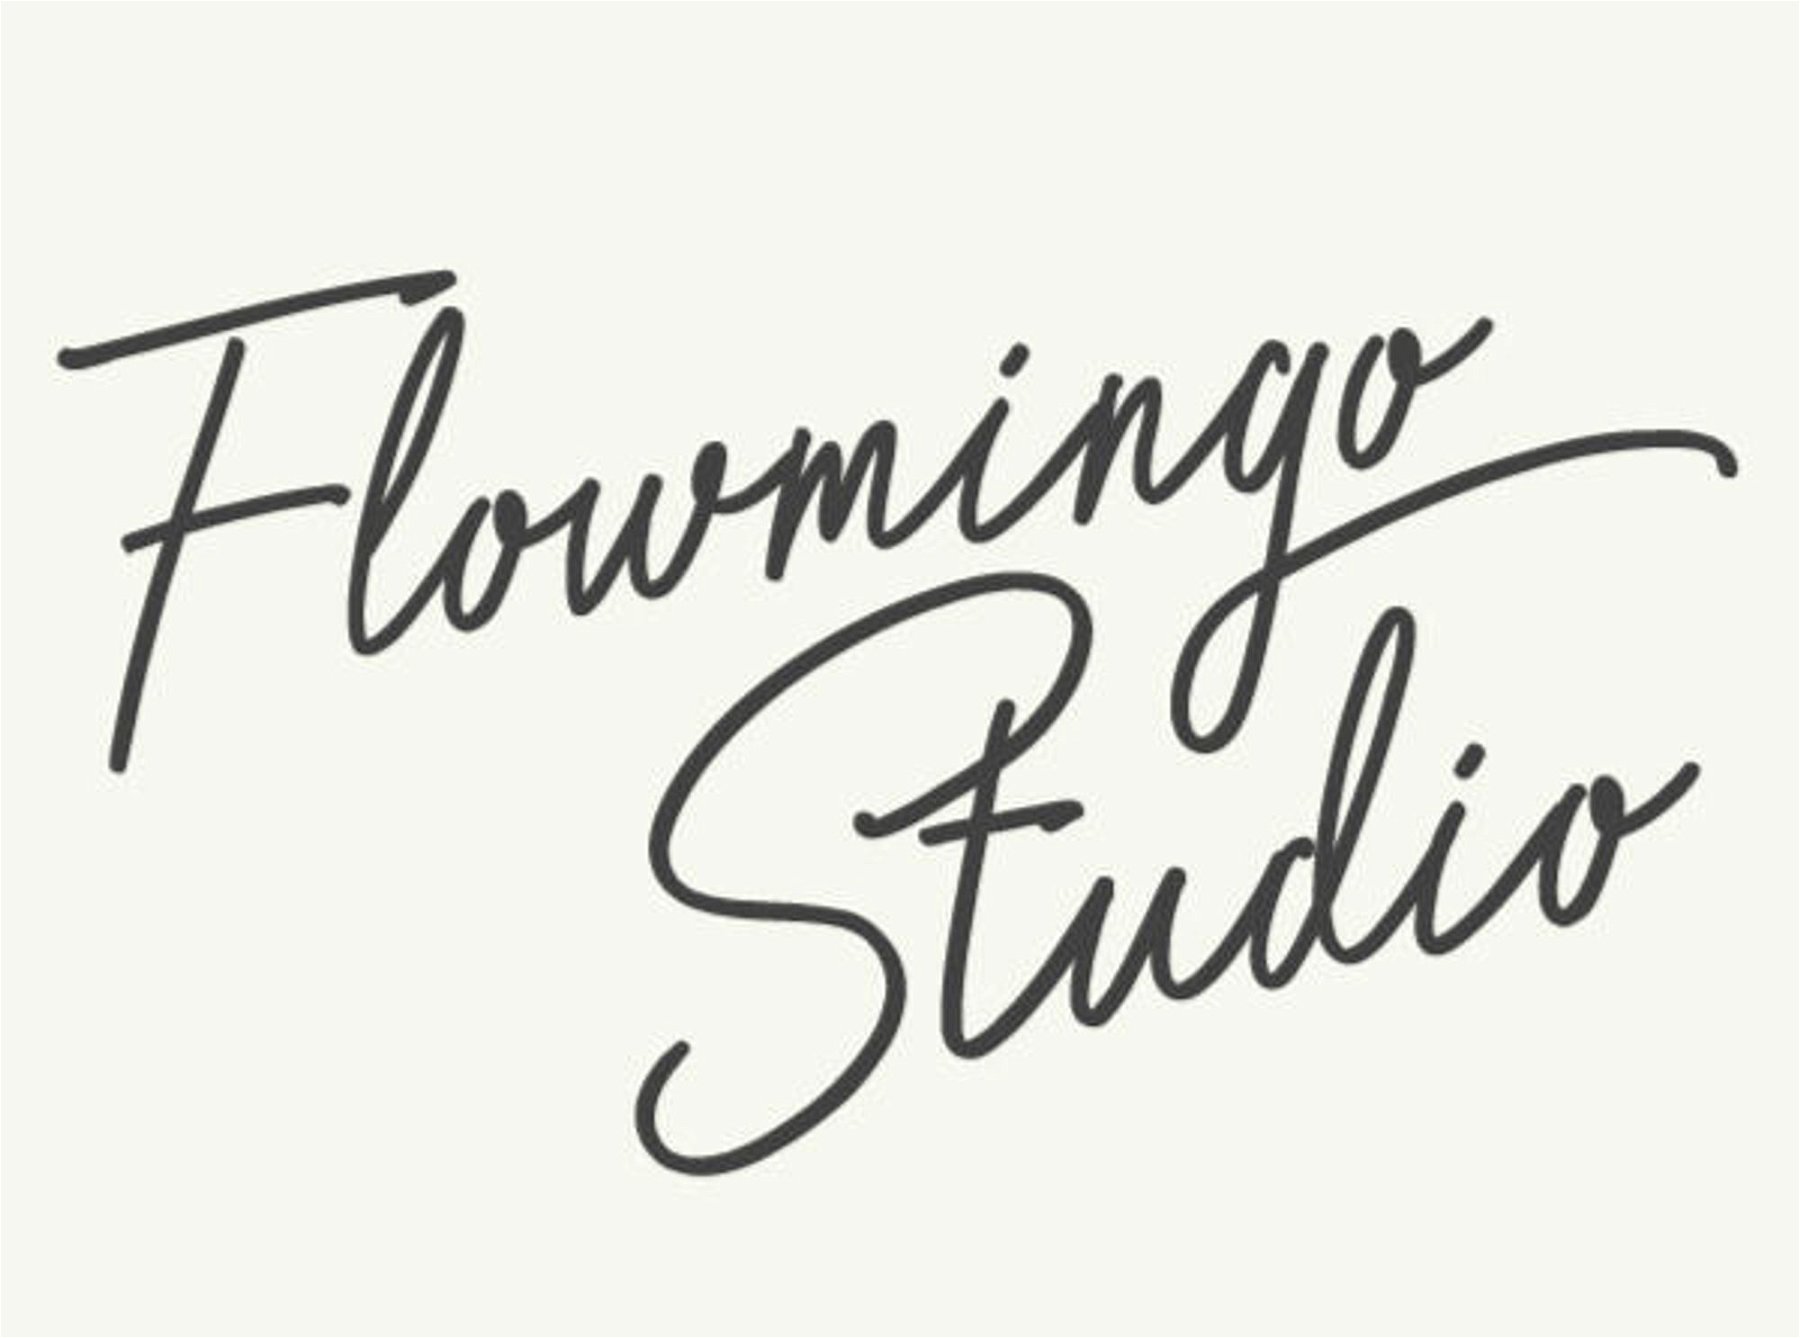 Flowmingo.studio